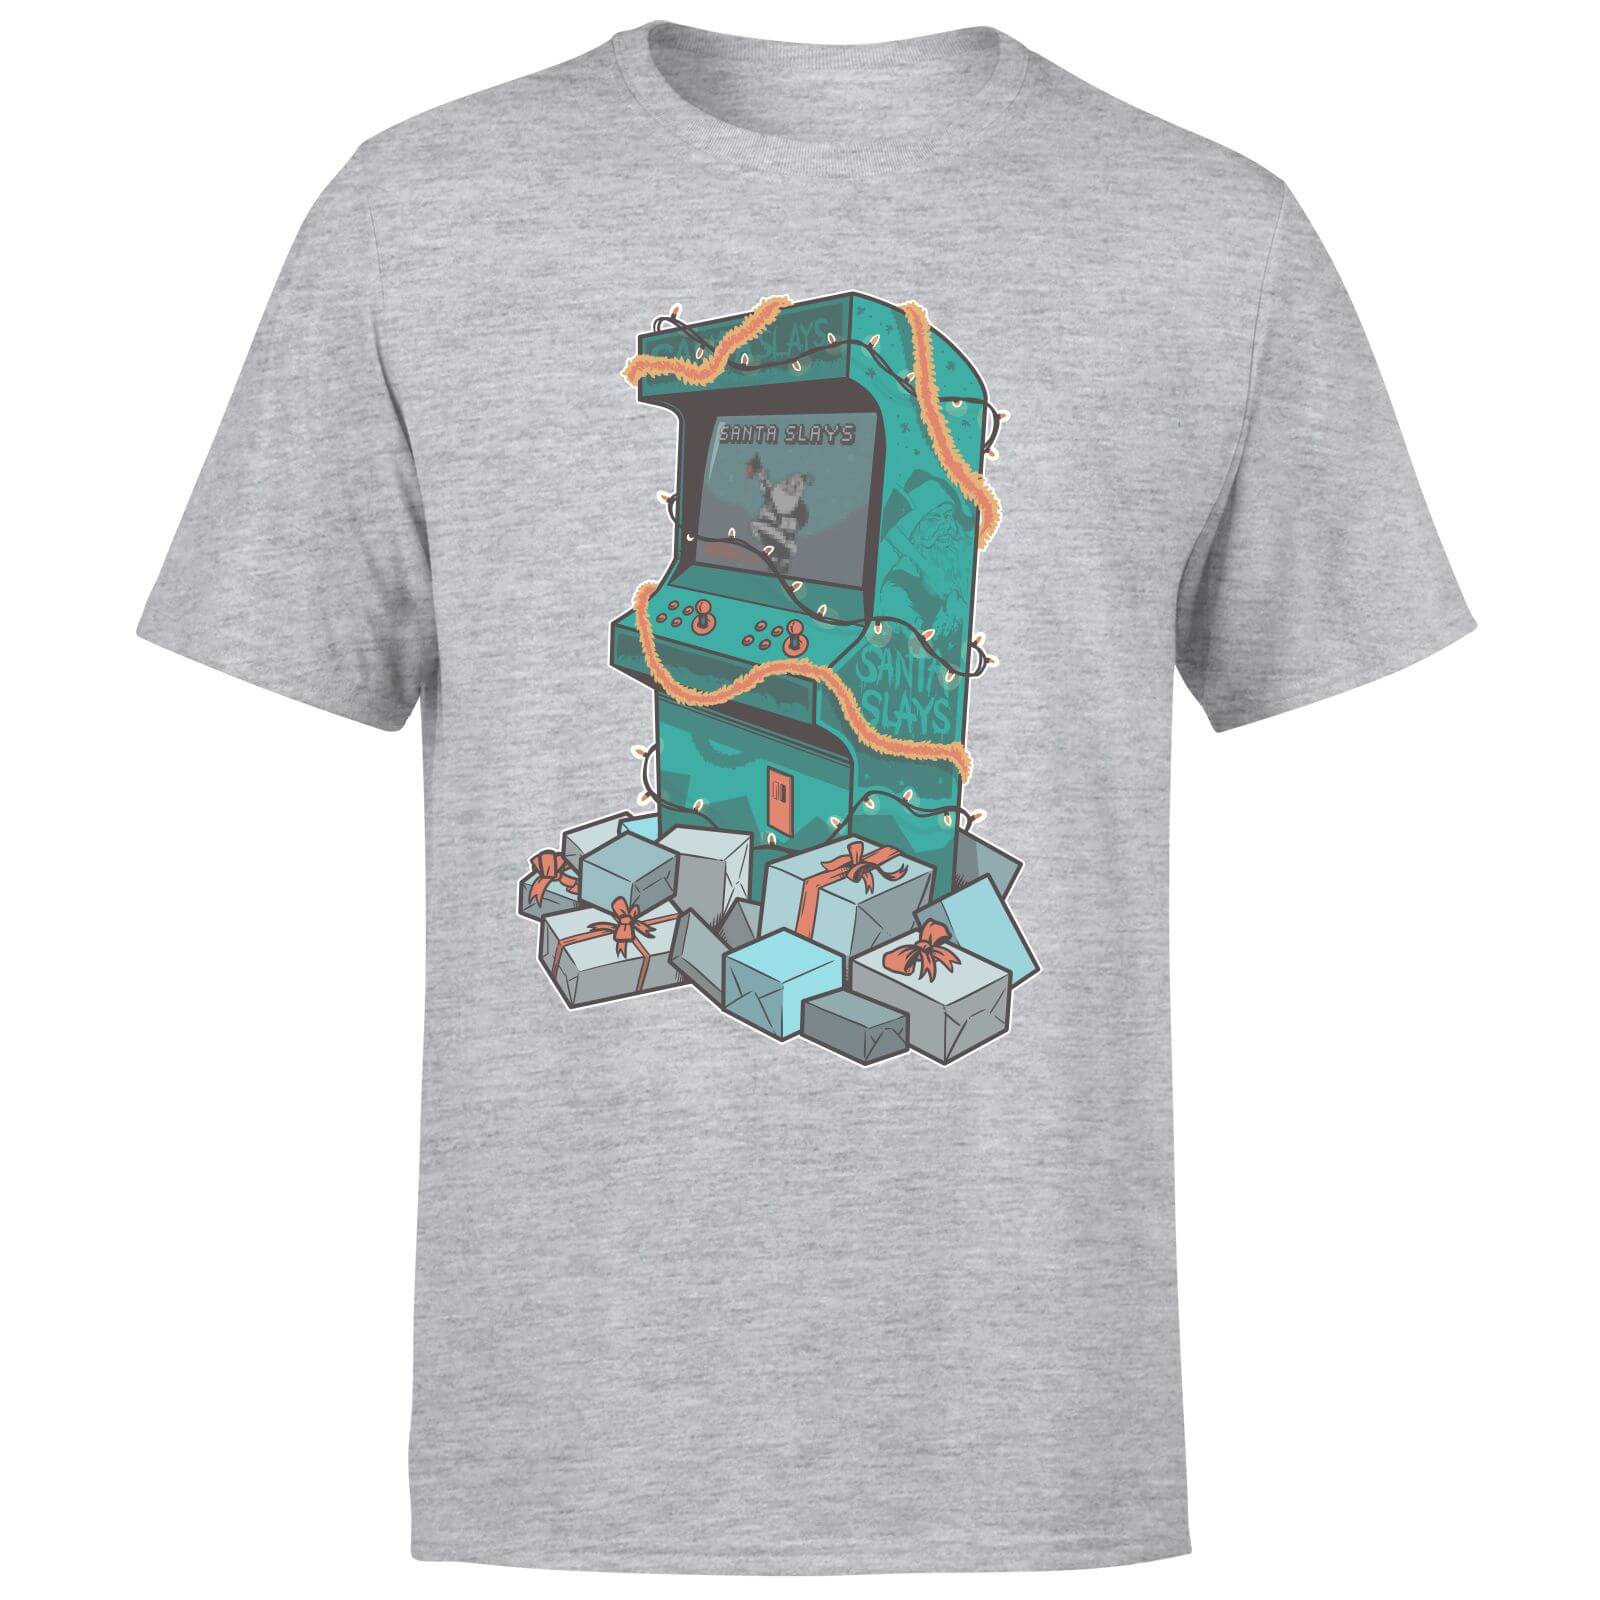 Arcade Tress T-Shirt - Grey - M - Grey